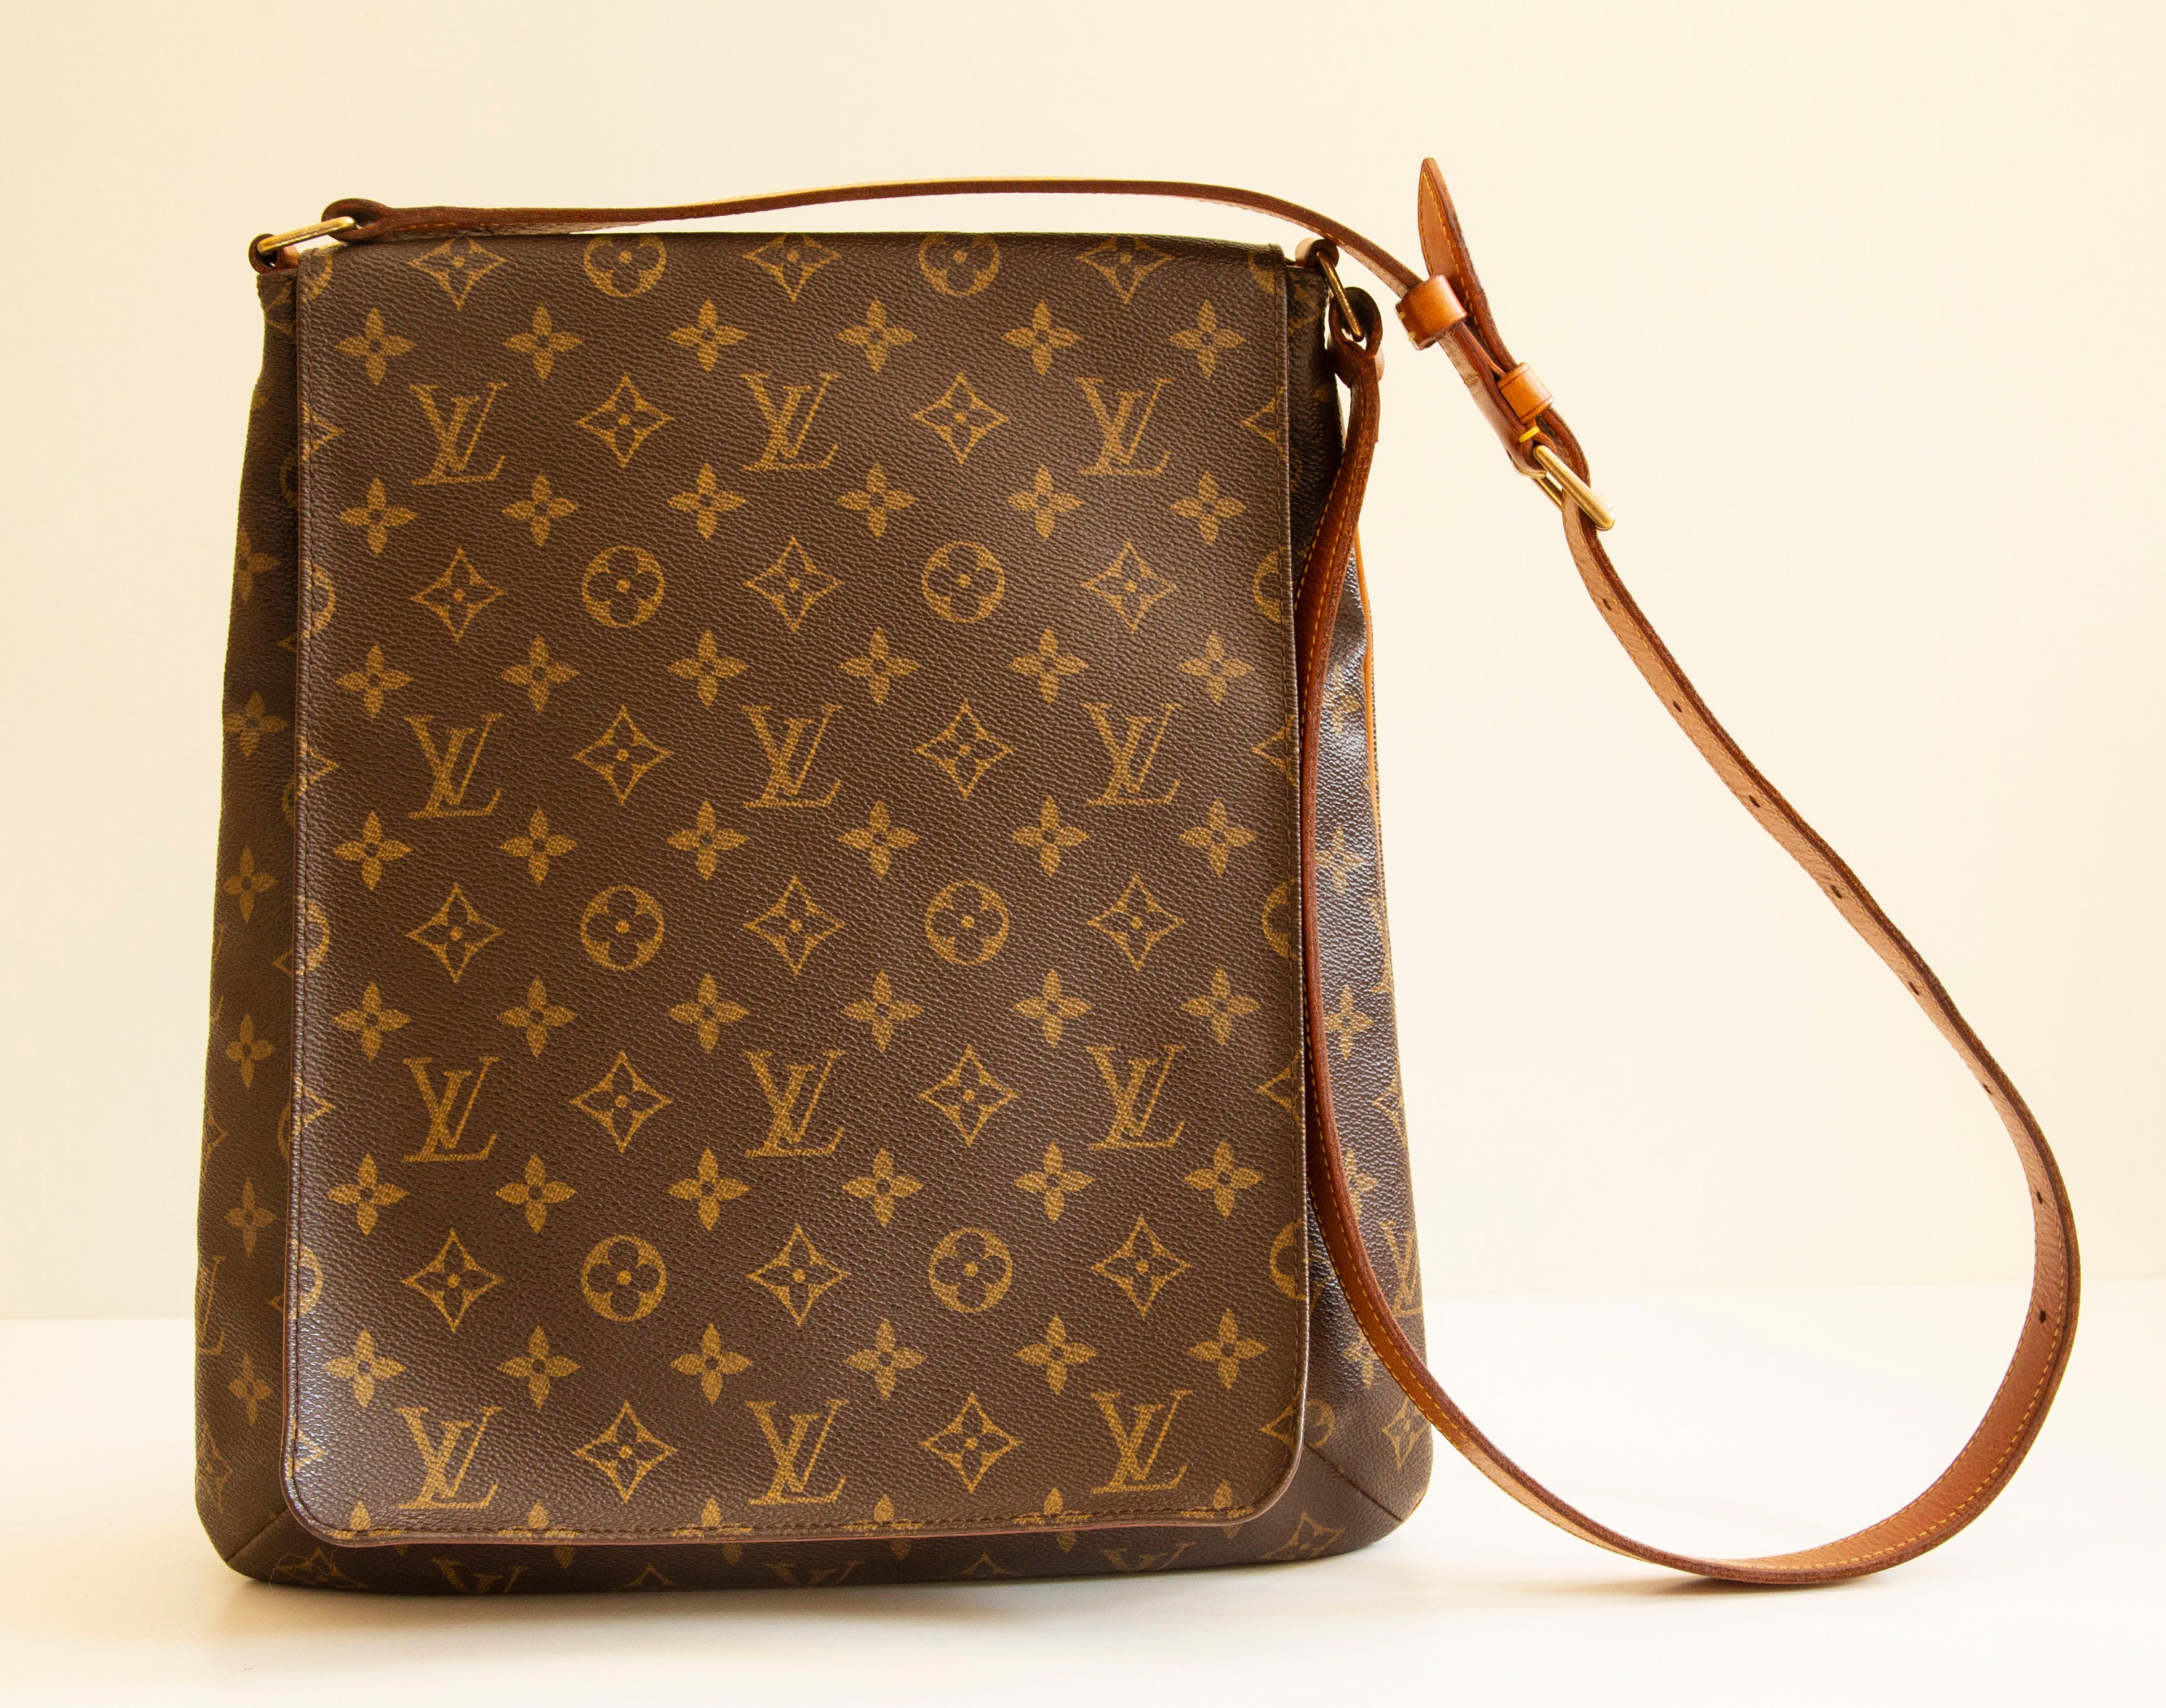 Buy Cross Body Bag Louis Vuitton Online In India -  India